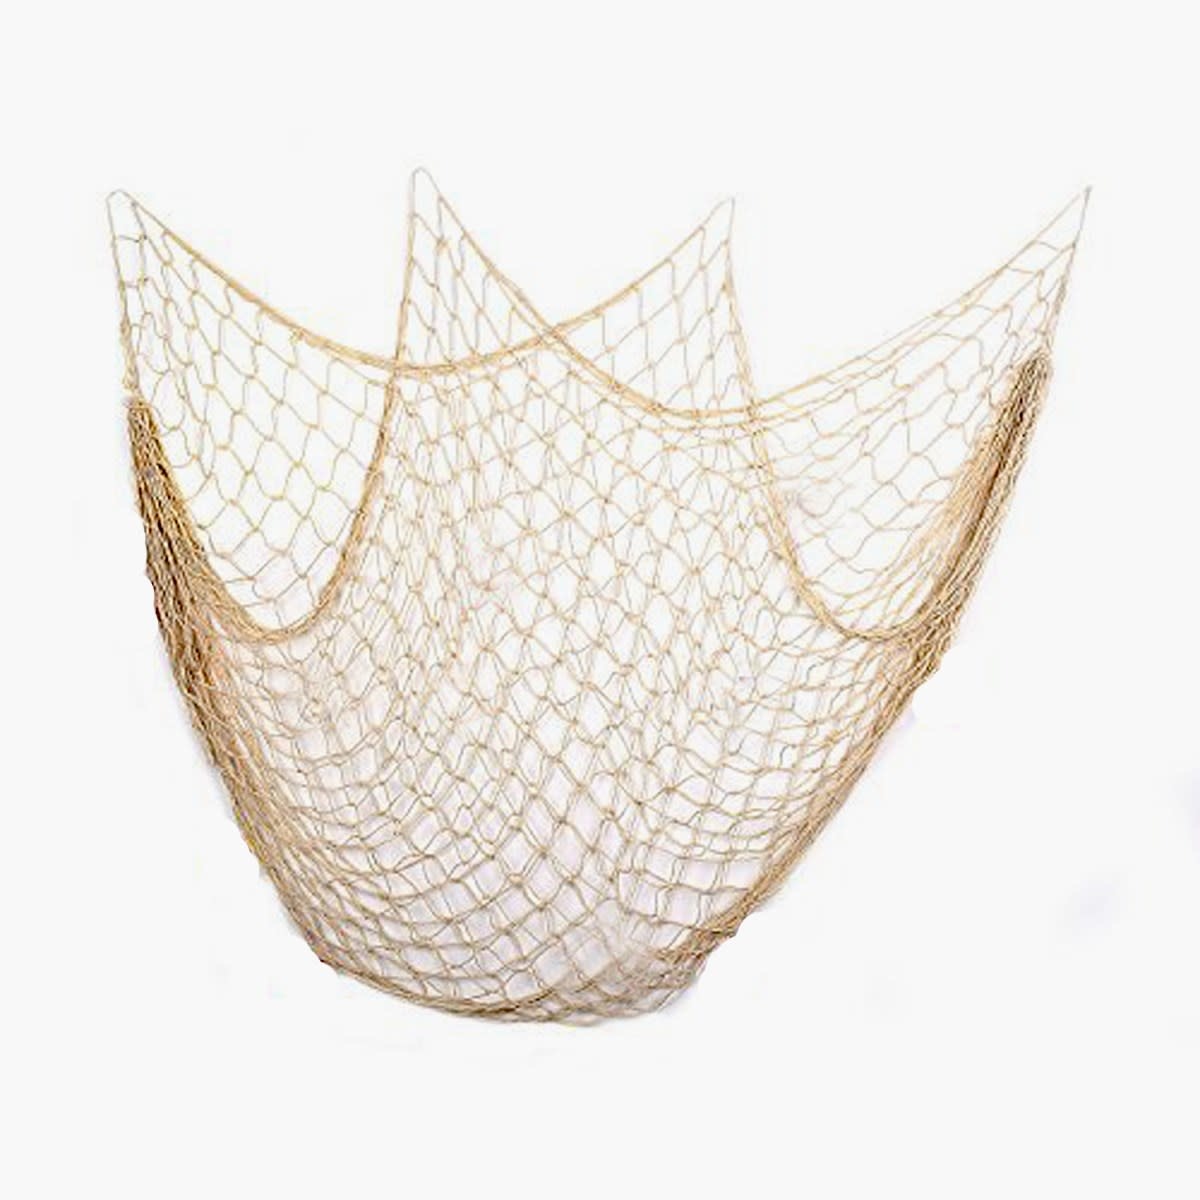 Decorative Fishing Net - Navy Blue (100cm x 200cm) - Give Fun